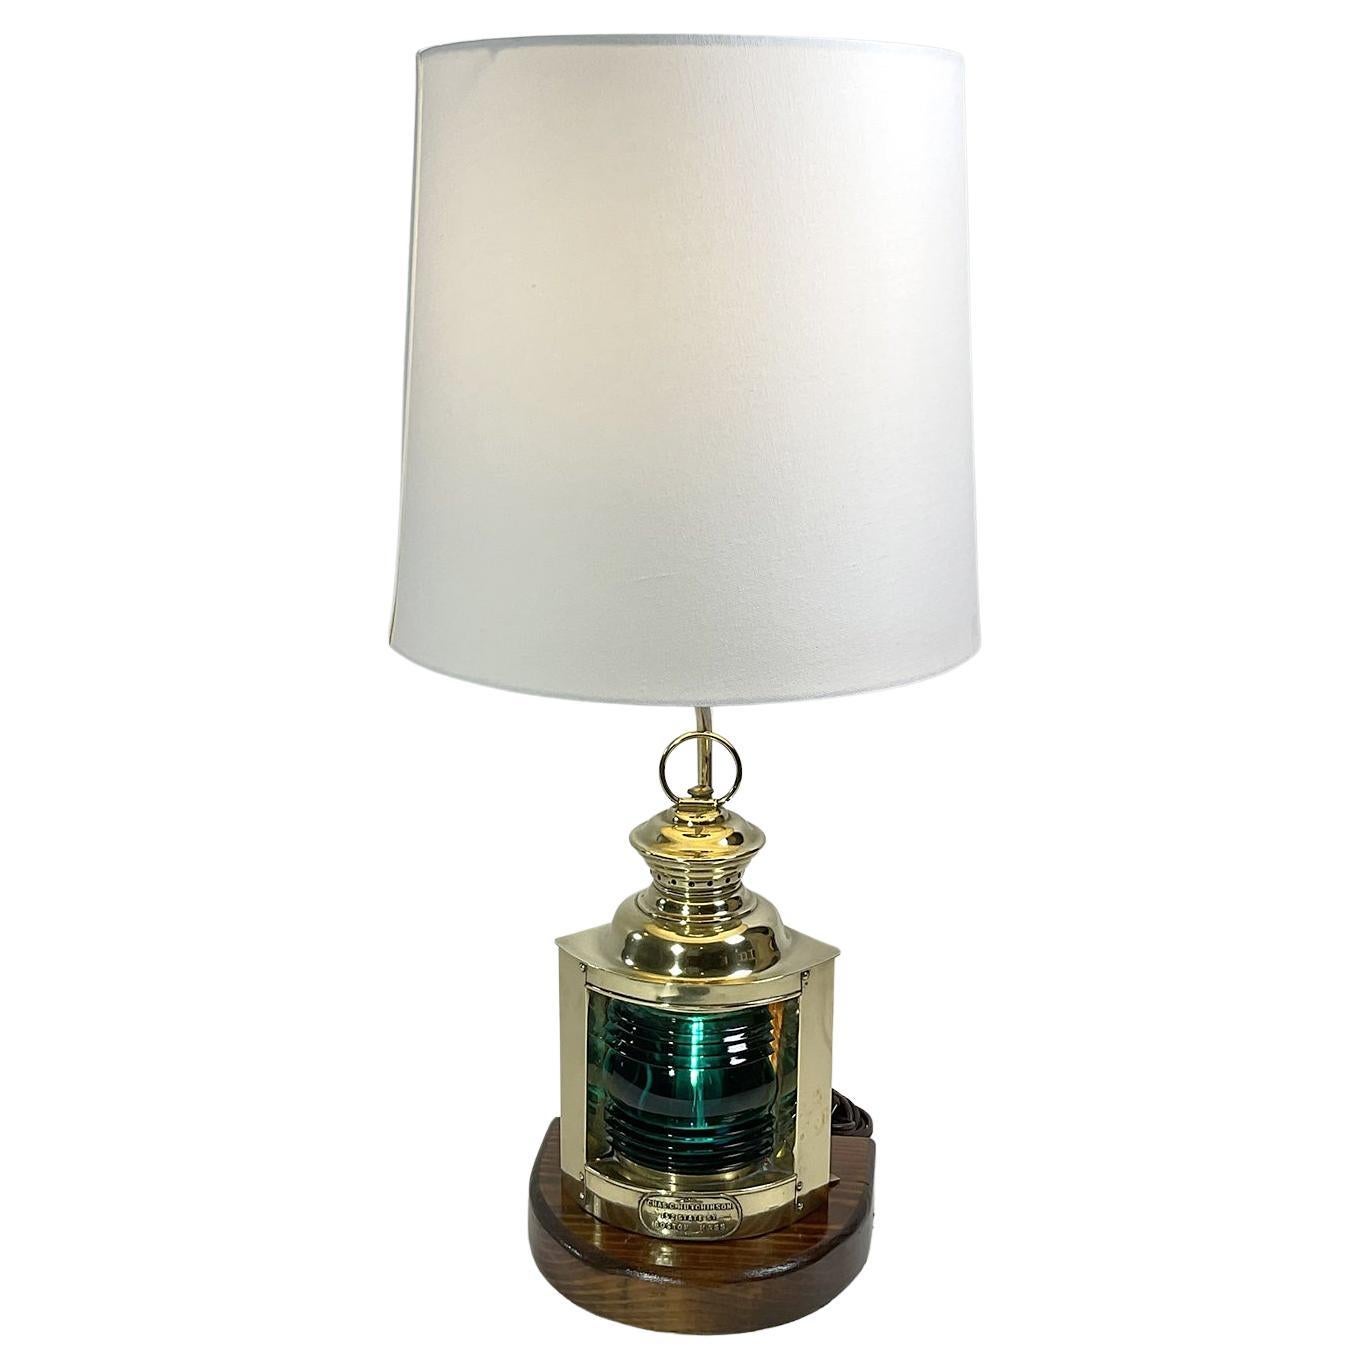 Antique Ship Lantern Mounted as Lamp For Sale